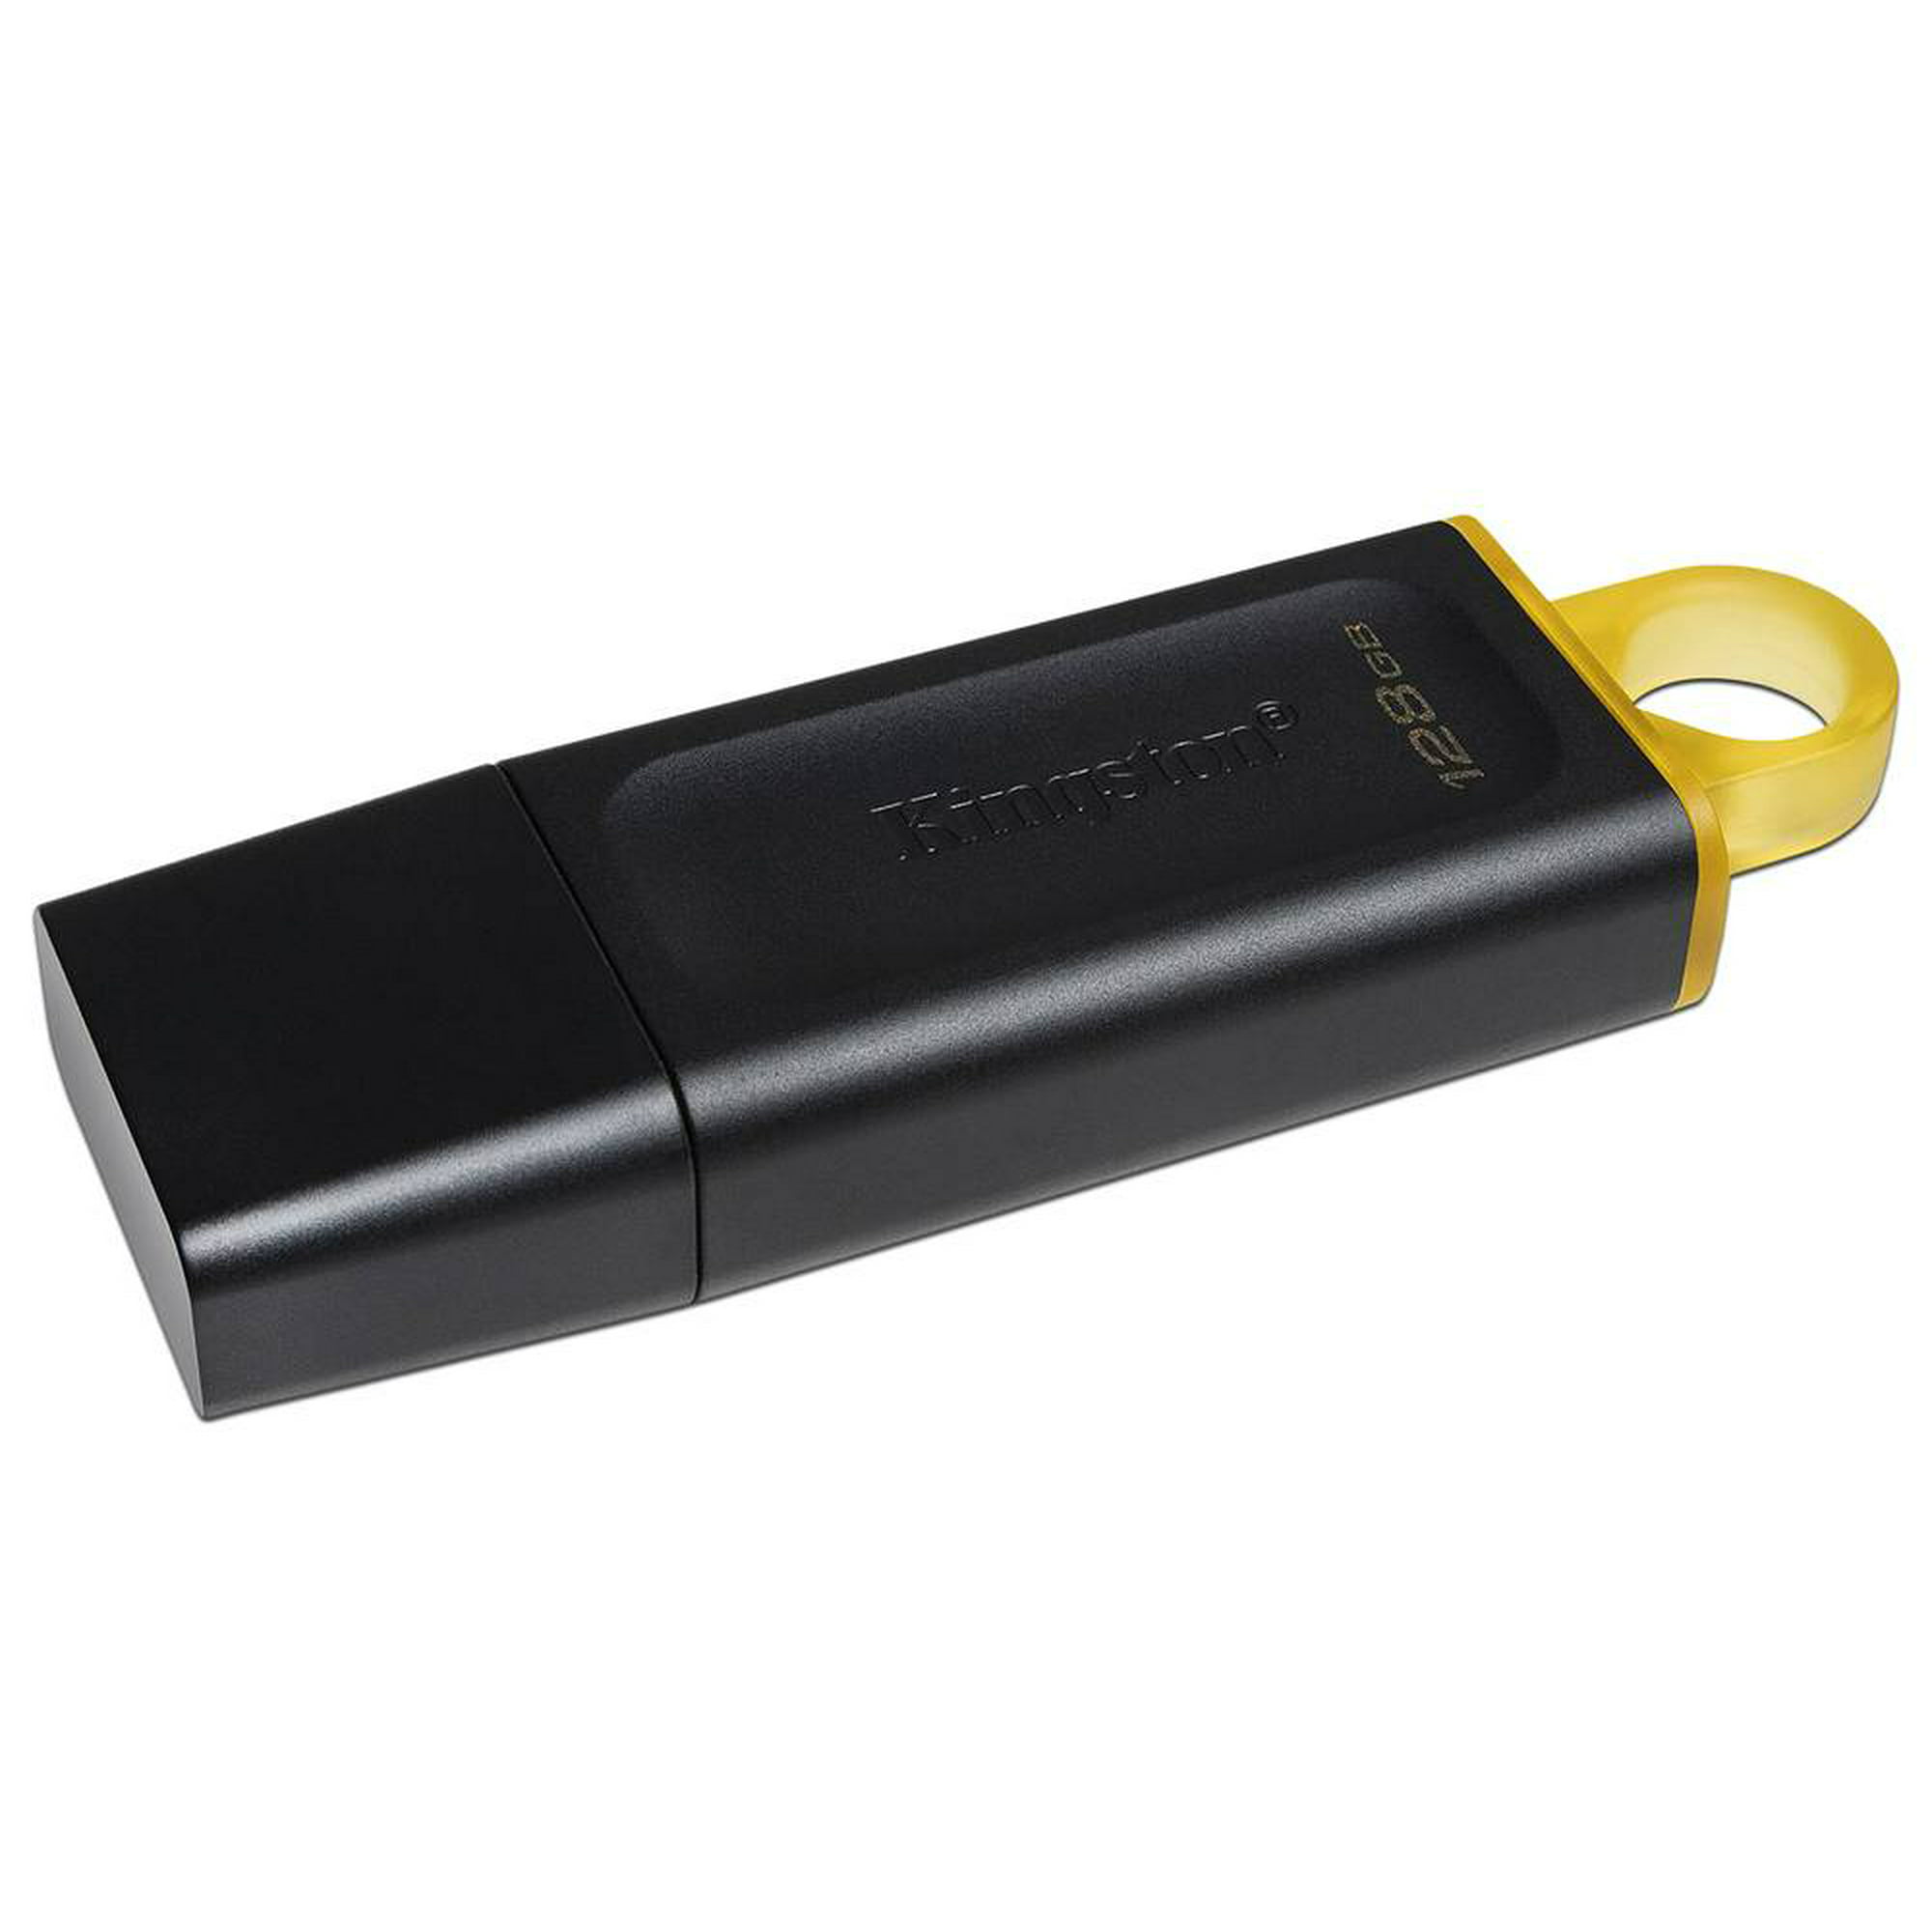 Ripley - MEMORIA USB 3.1 KINGSTON M 128 GB - NEGRO